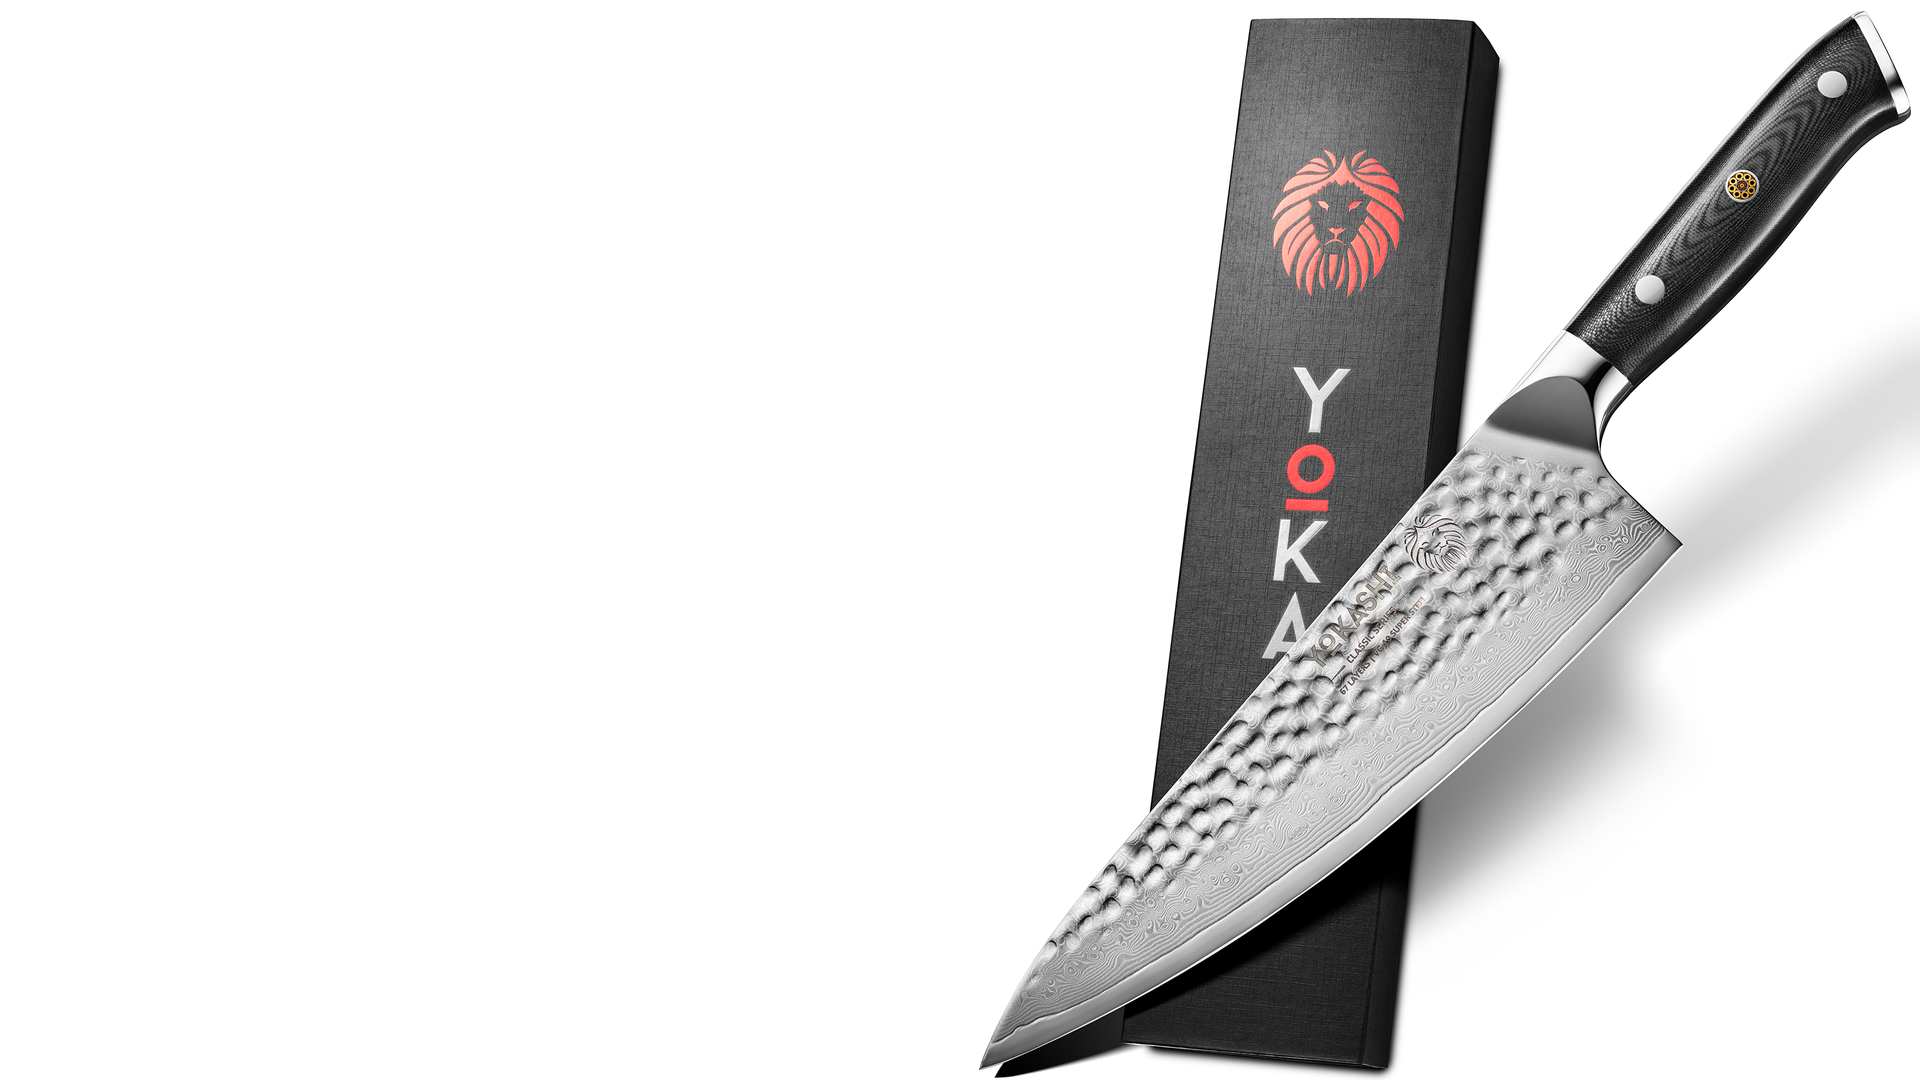 YOKASHI Chef Knife - 8 inch - Professional Kitchen Knife - Black Titanium  Nitride Coated - Razor Sharp-High Carbon 7CR17MOV, G10 Handle with Sheath